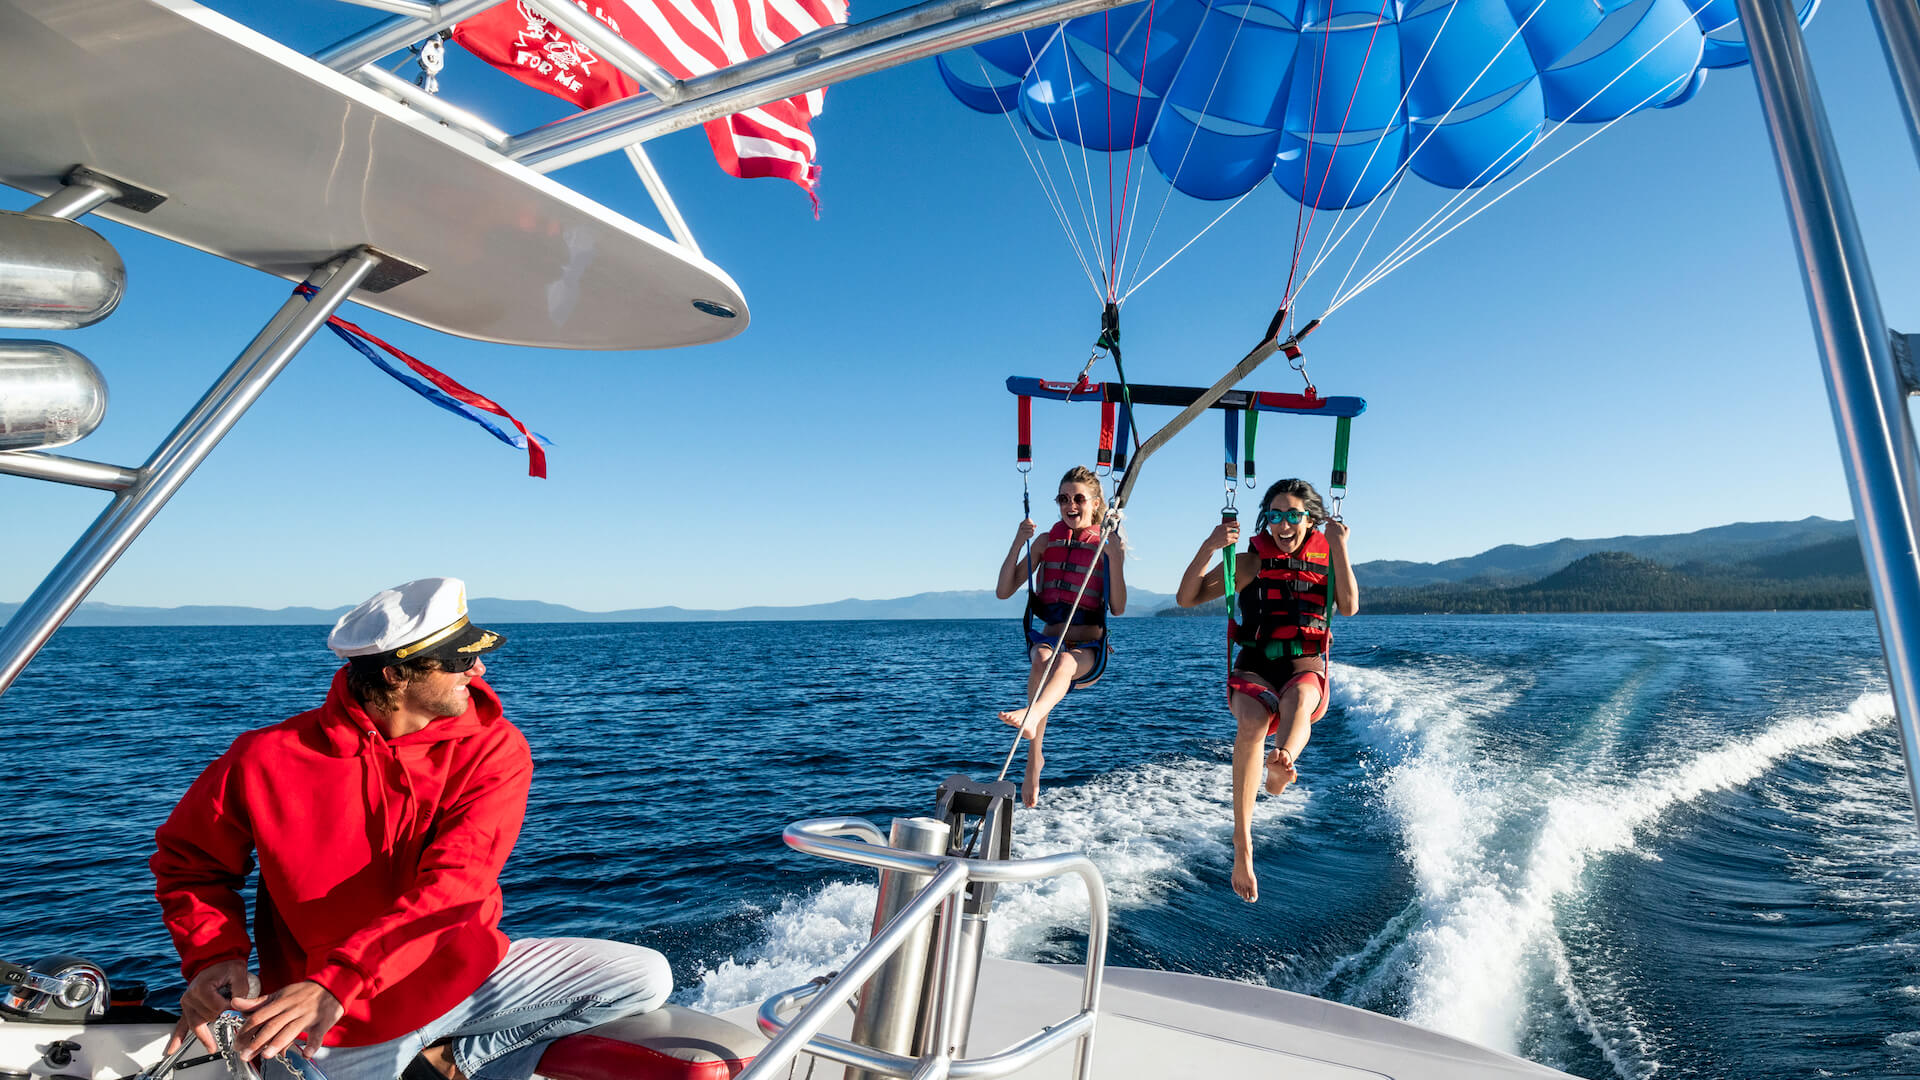 Parasailing with Ski Run Boat Company at Lake Tahoe - Rachid Dahnoun / LTVA